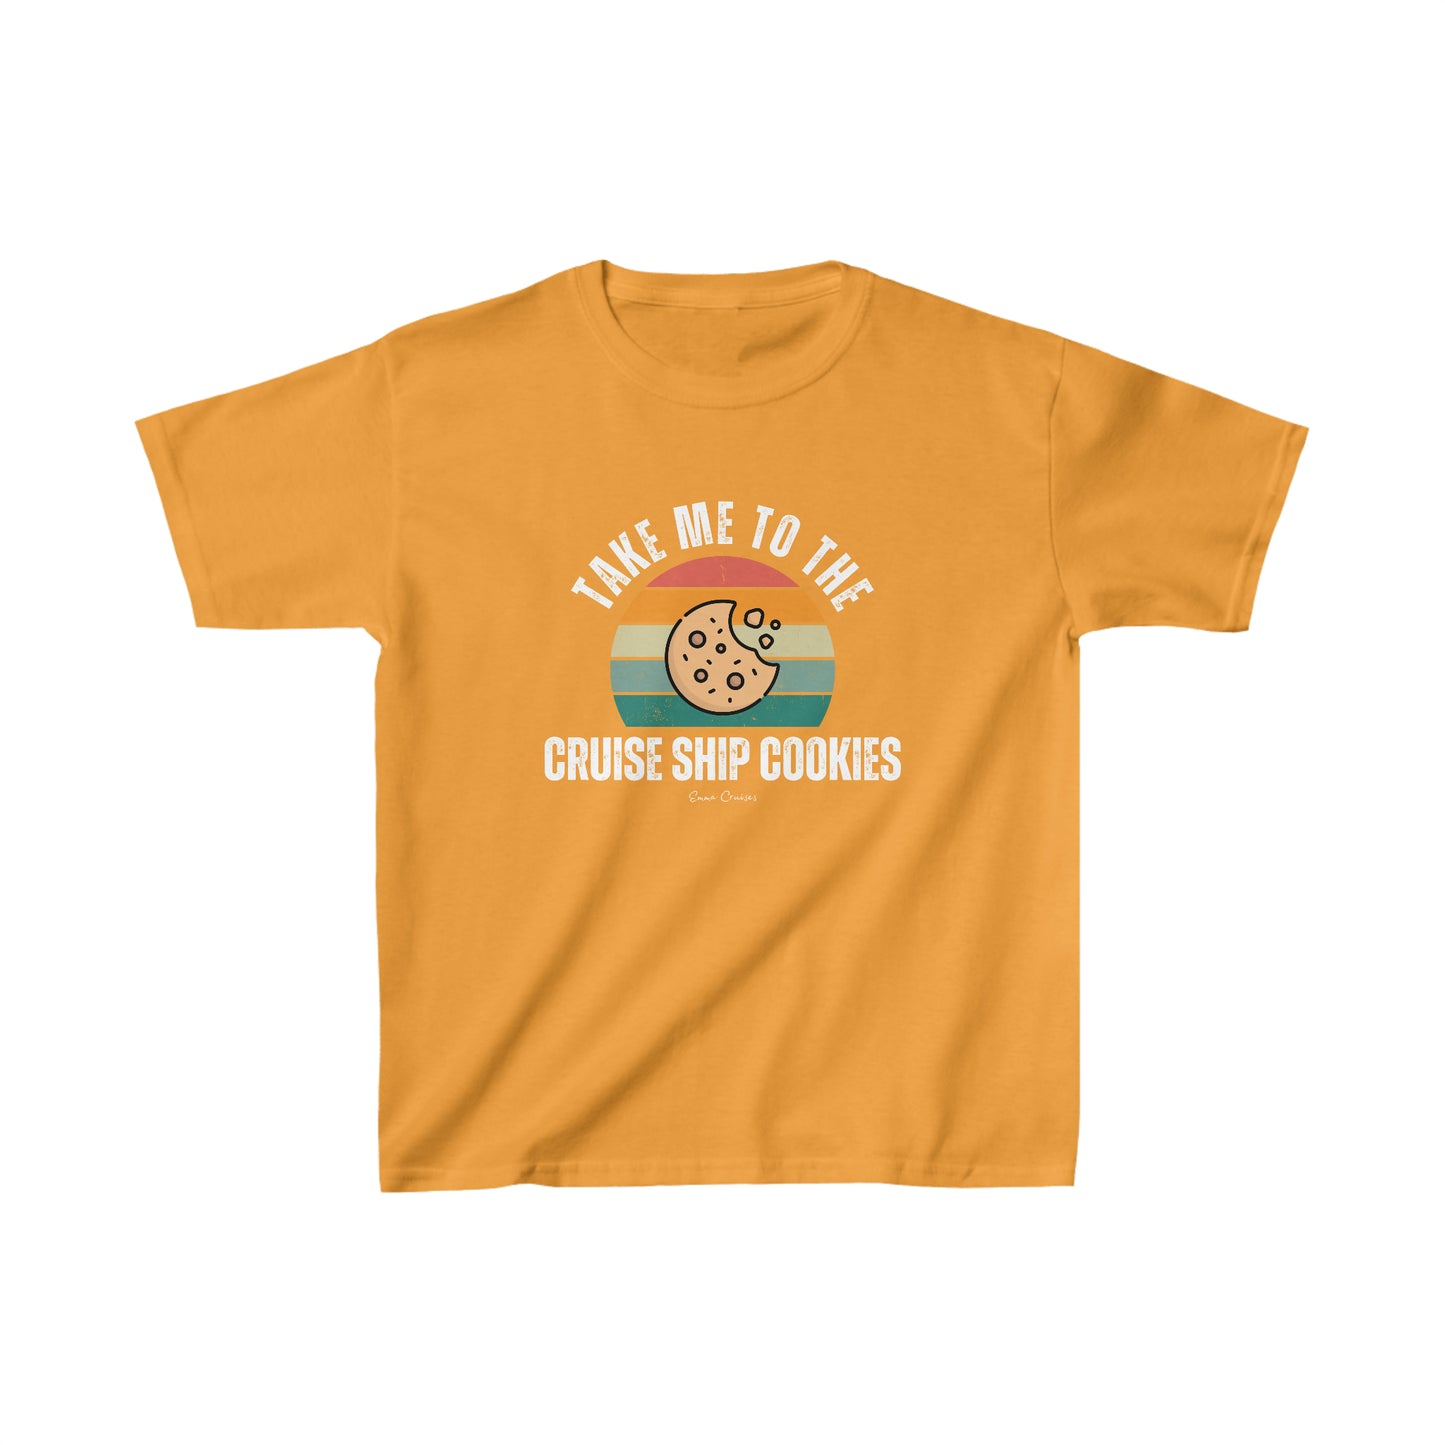 Take Me to the Cruise Ship Cookies - Kids UNISEX T-Shirt